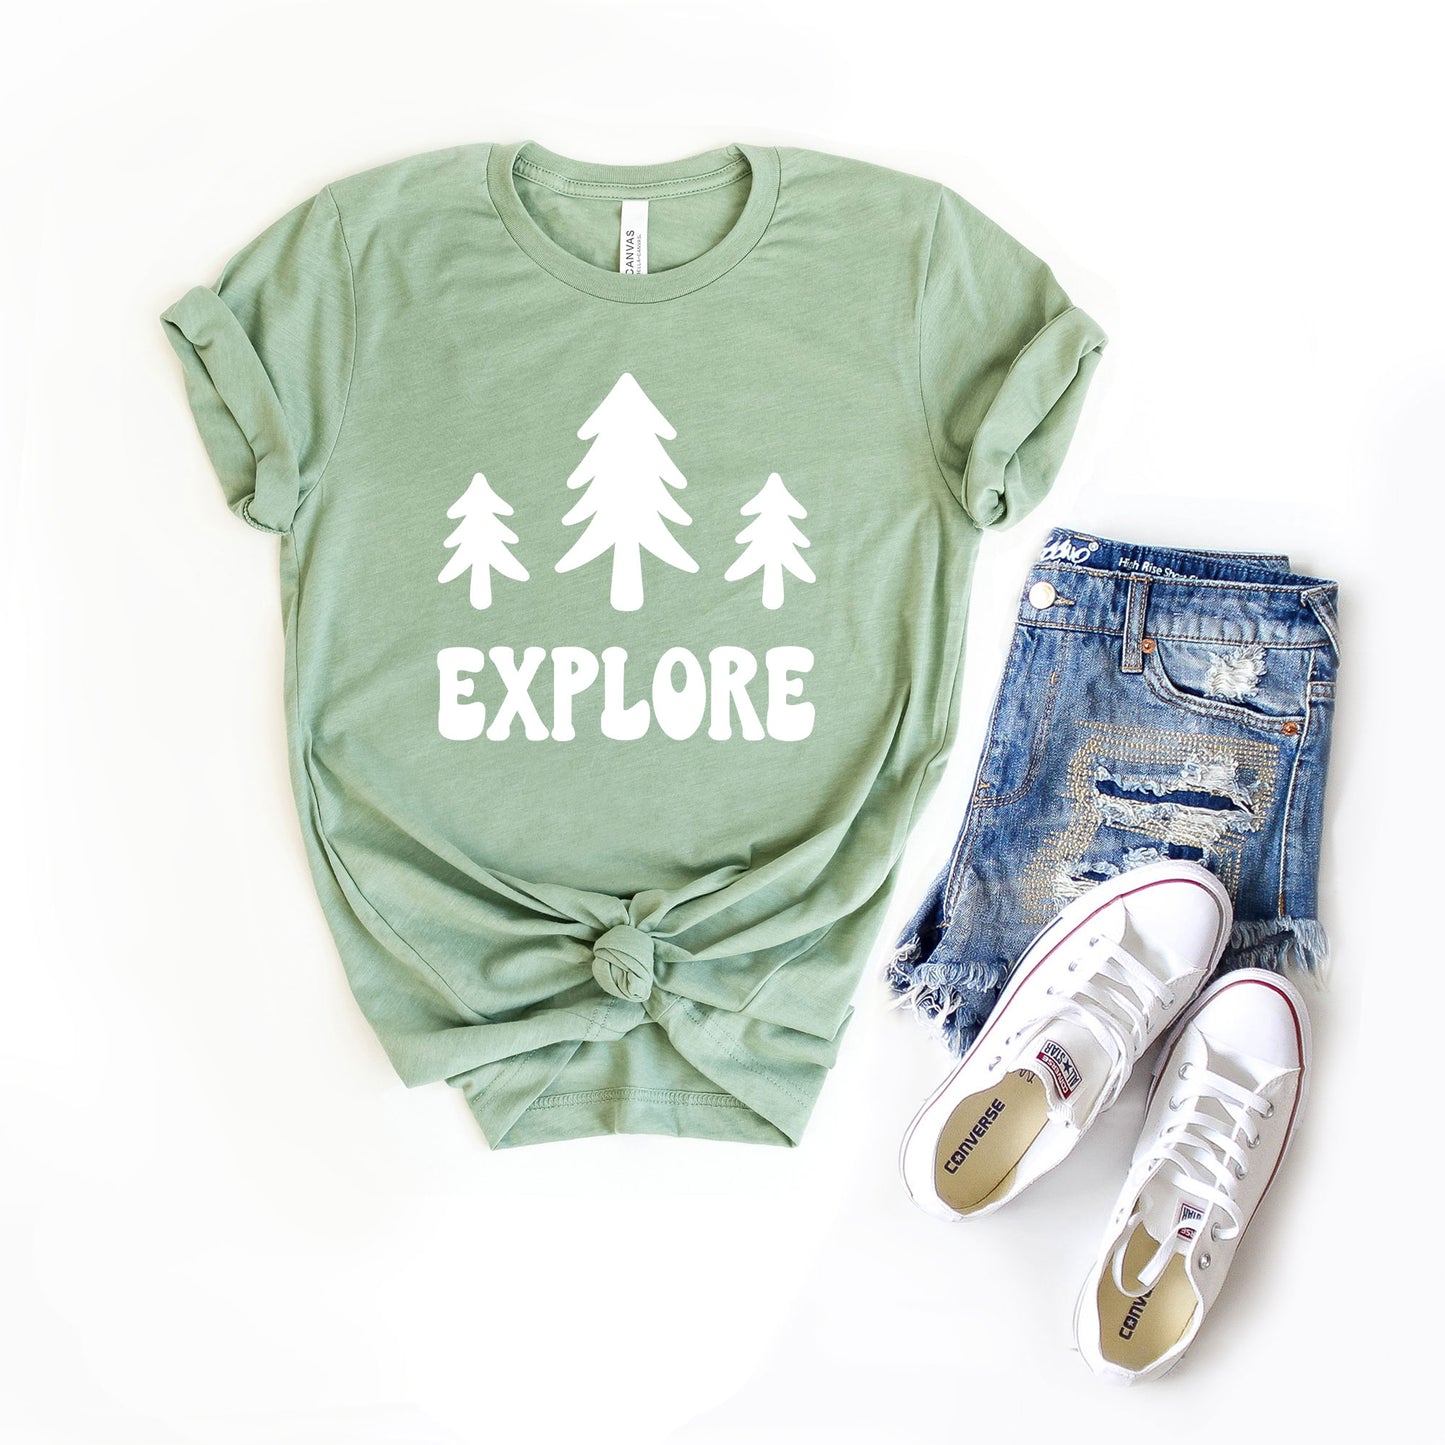 Explore Trees | Short Sleeve Graphic Tee